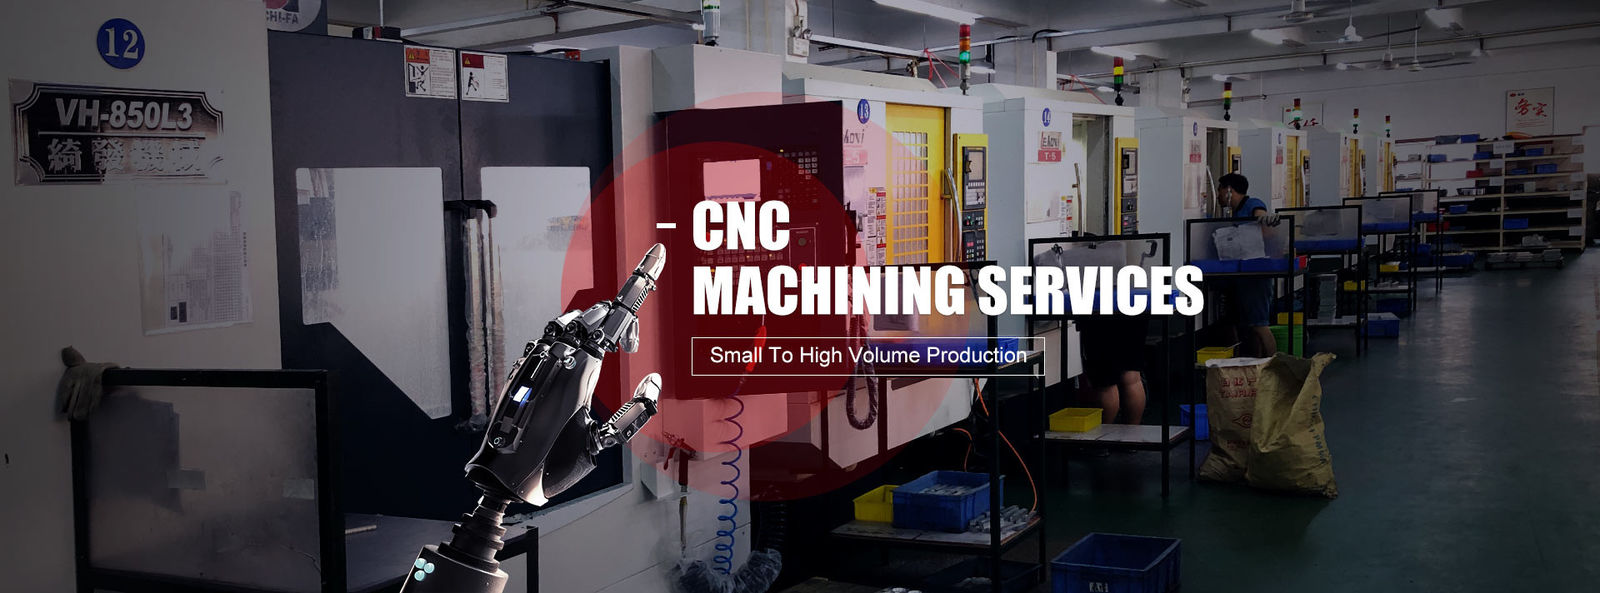 quality Precision CNC Parts factory